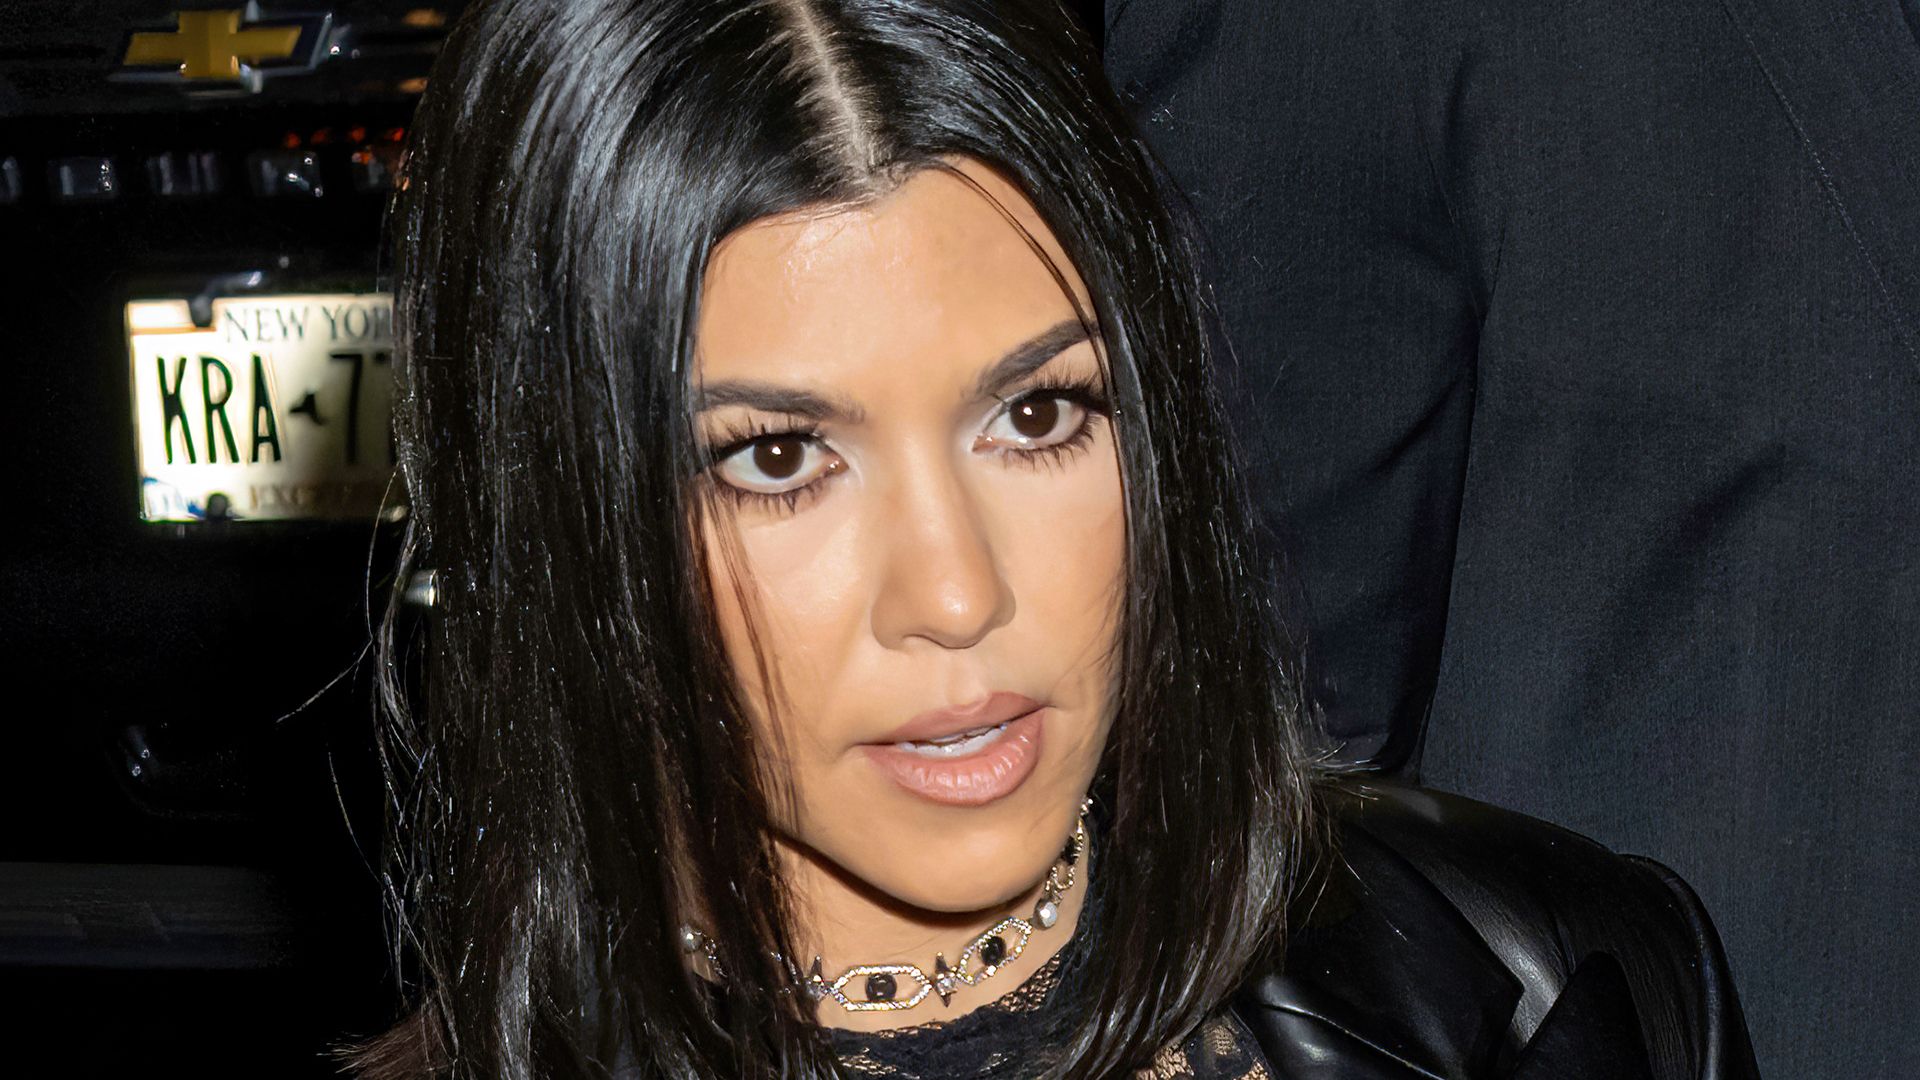 Close up of Kourtney Kardashian wearing a black leather jacket